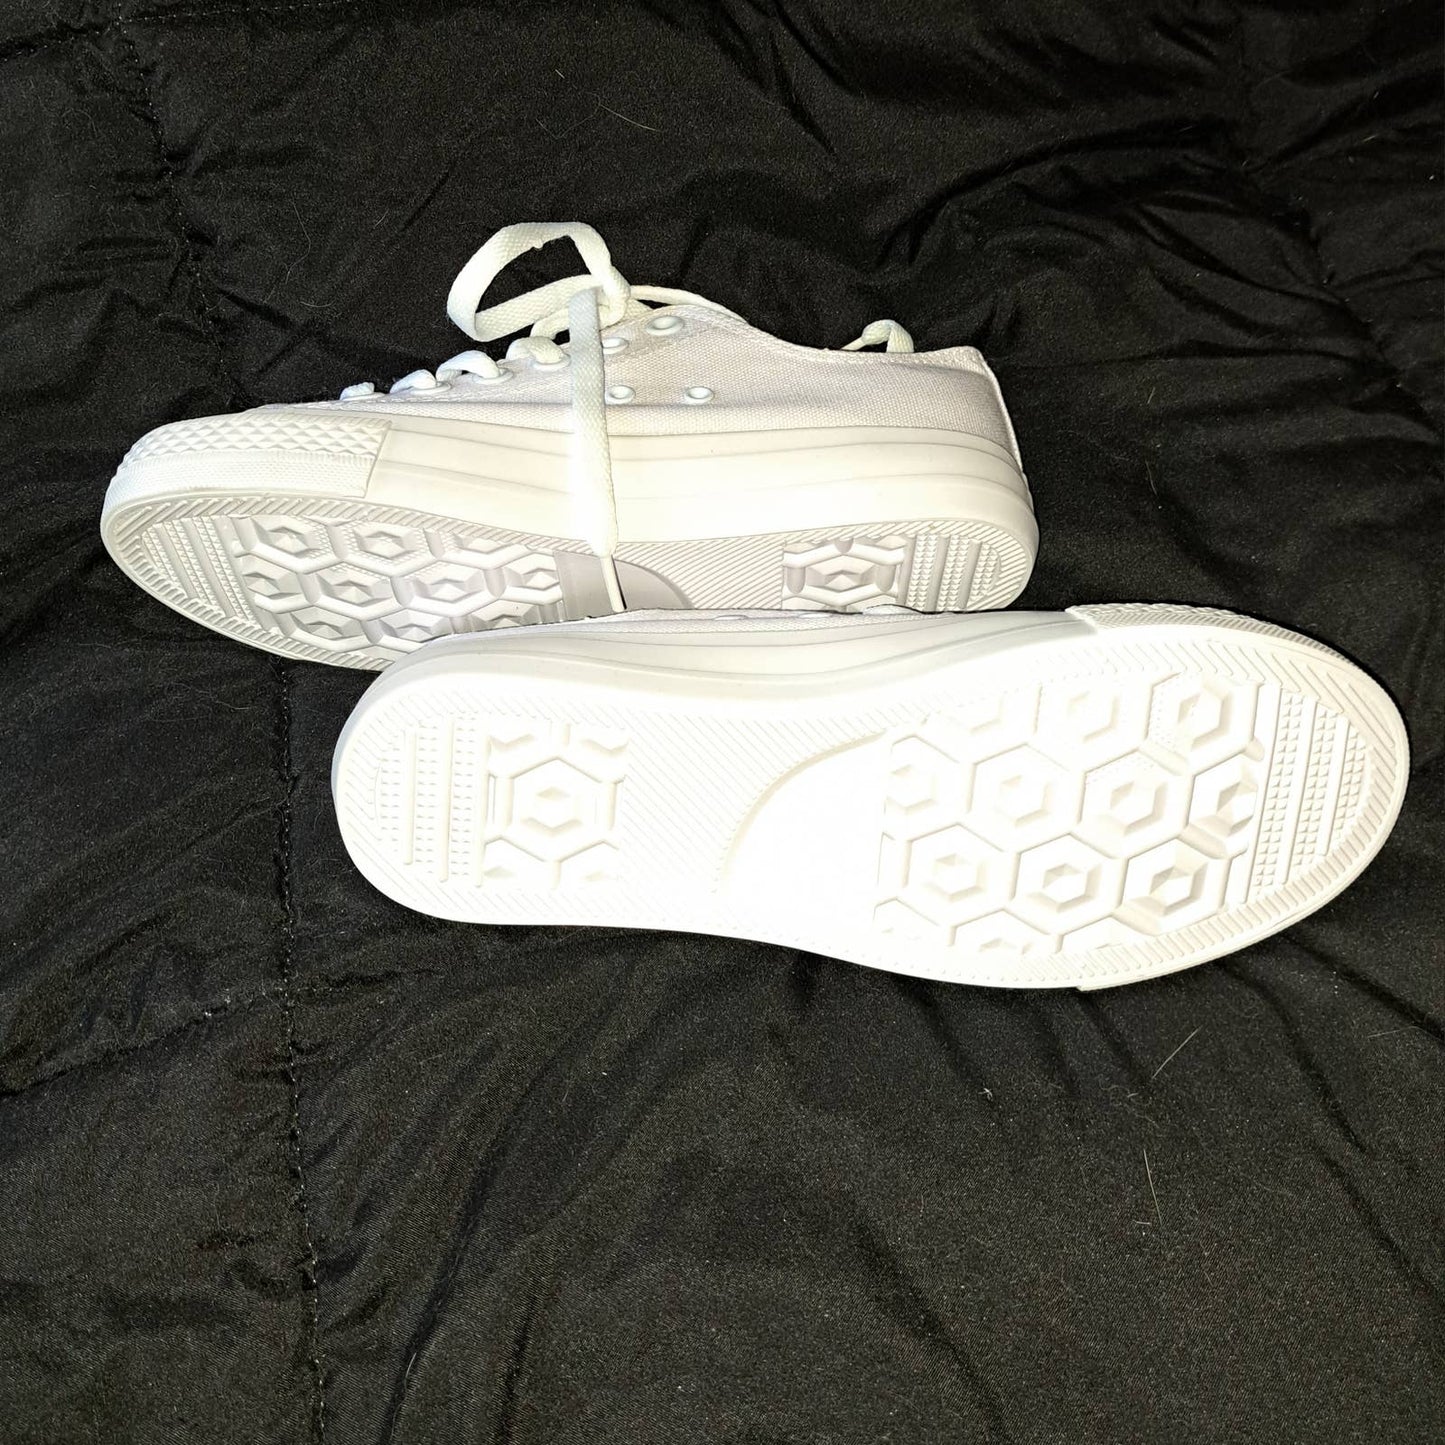 NIB-White Chucky sole sneaker 5.5 US